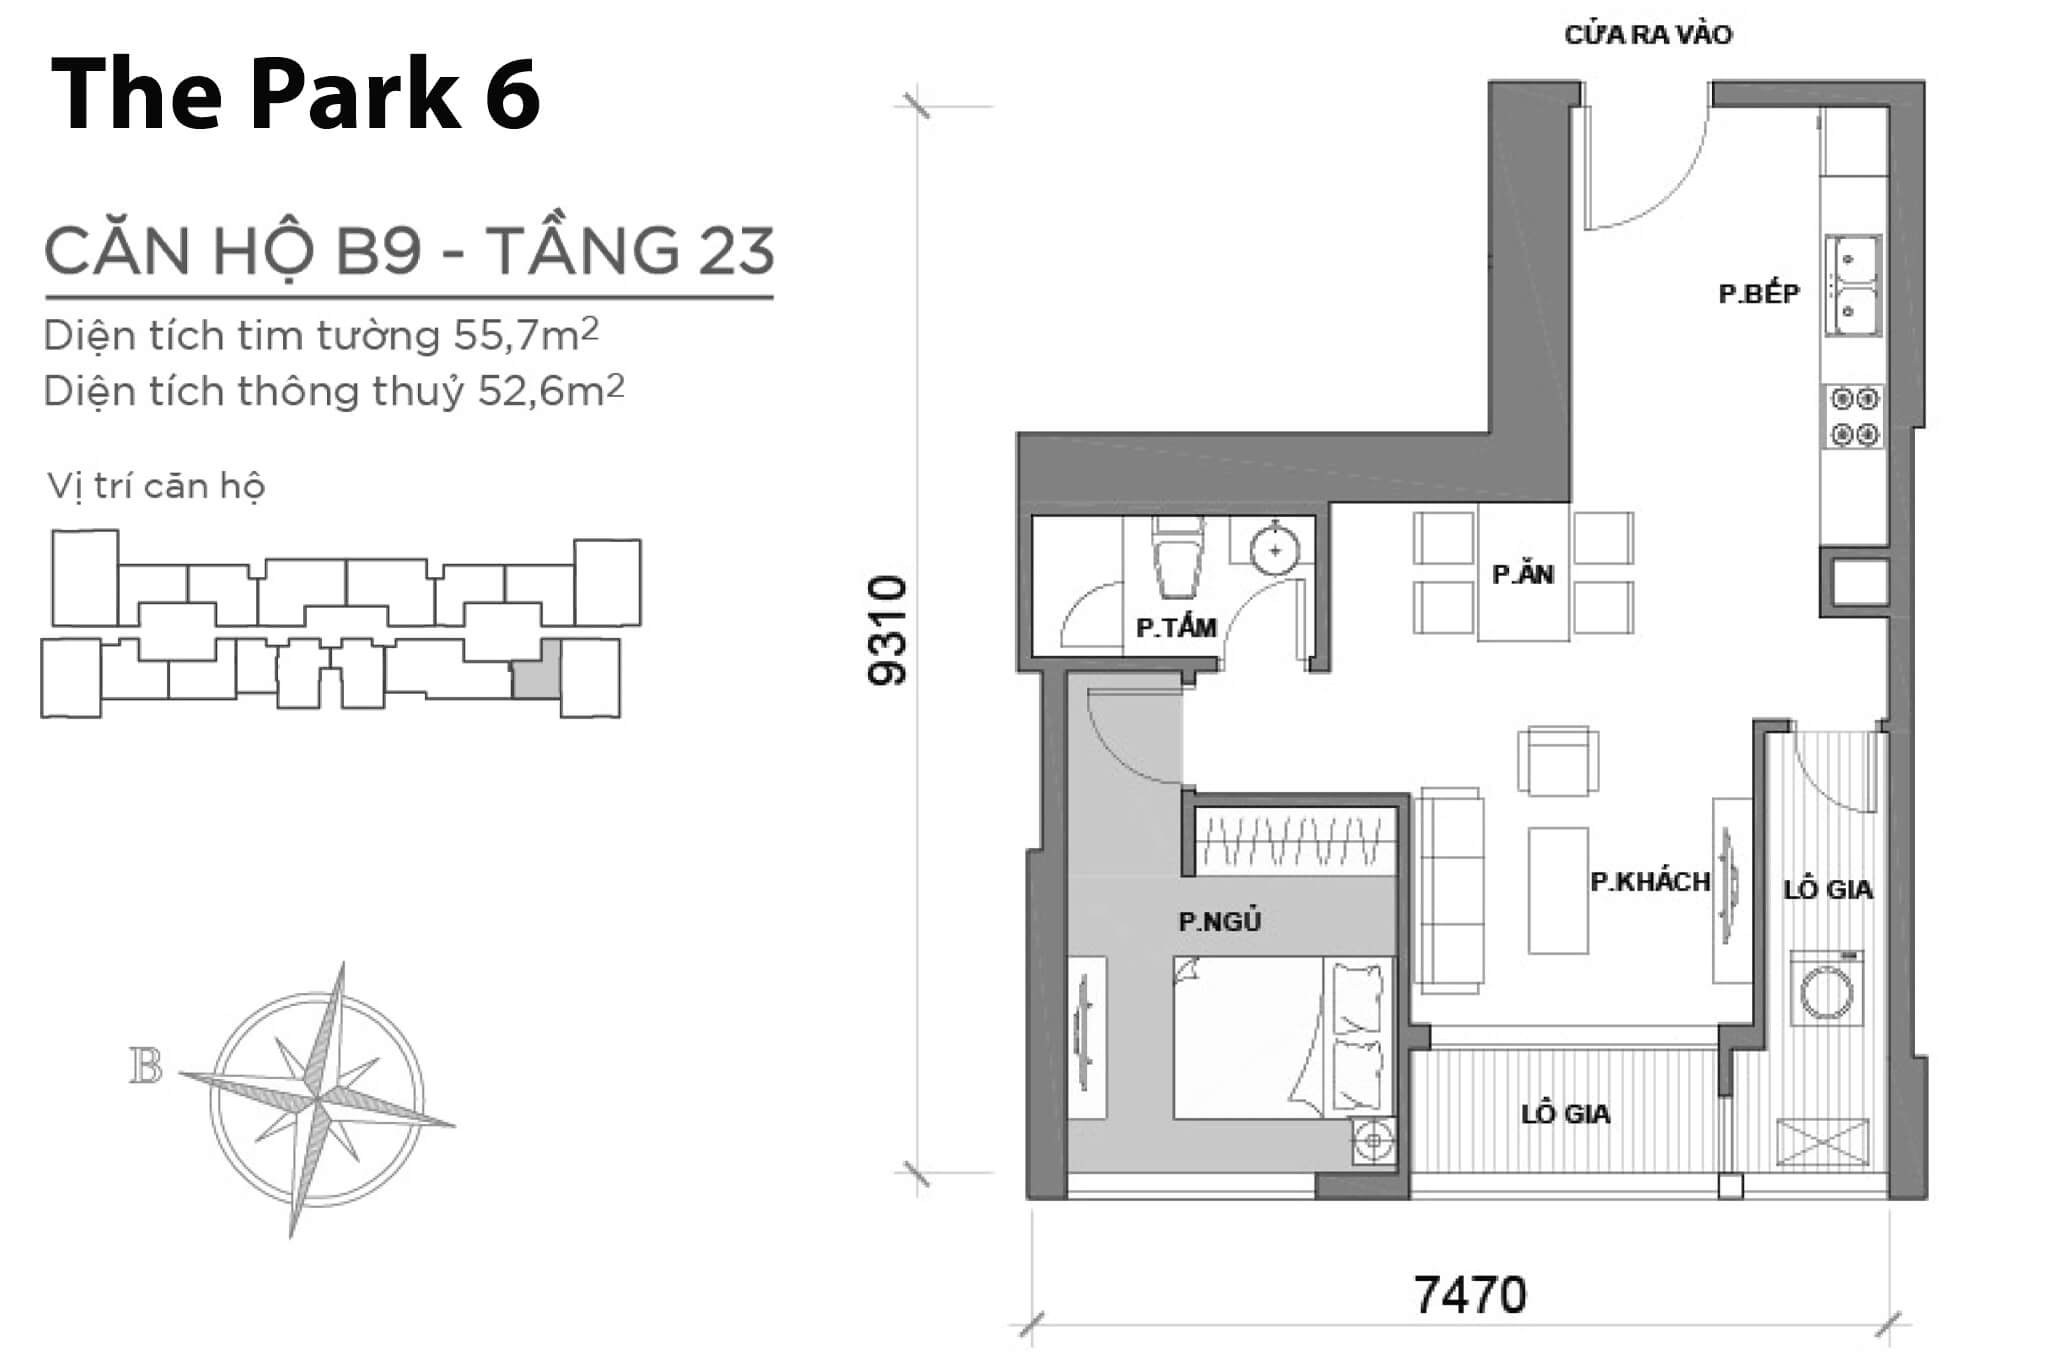 Layout căn hộ số 09 tầng 23 tòa The Park 6B - Mặt bằng Vinhomes Central Park